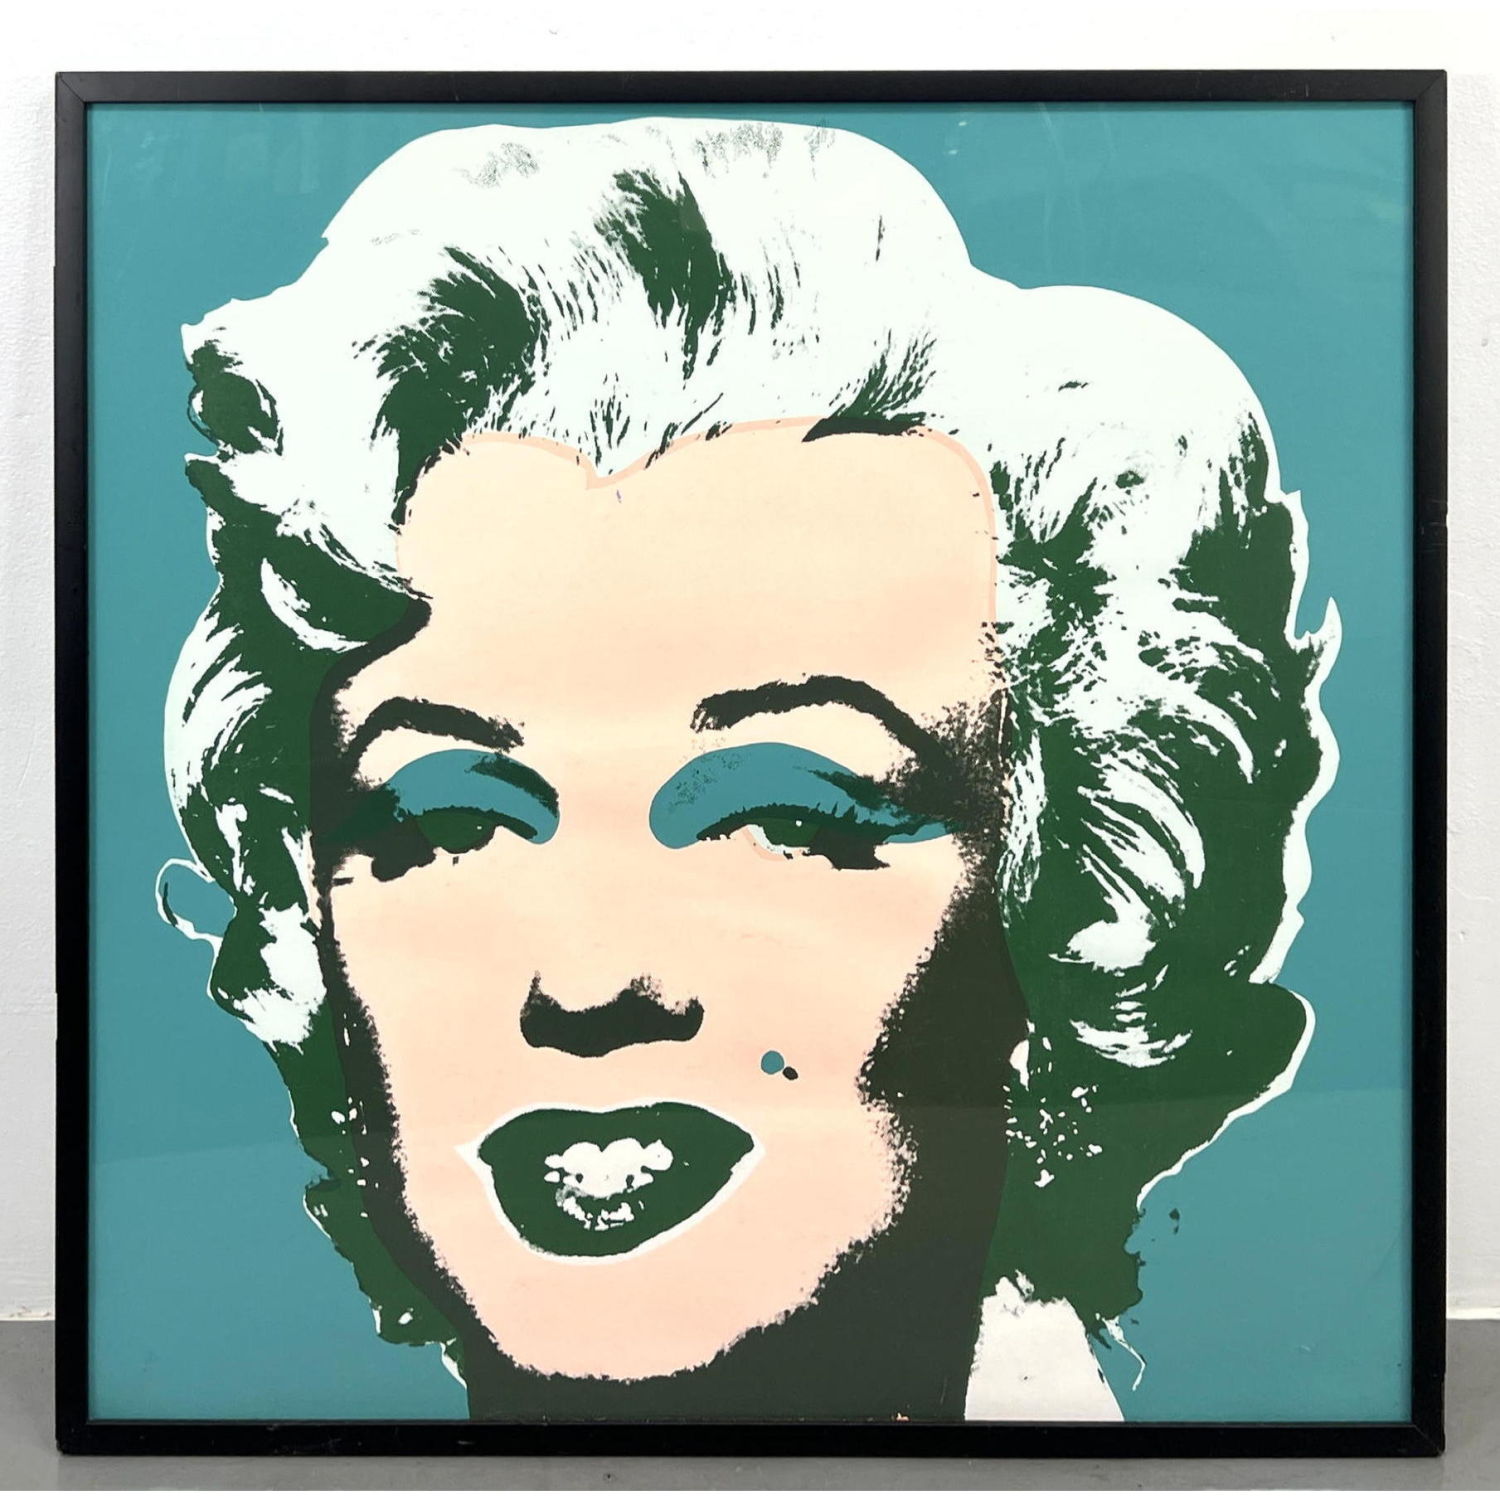 Andy Warhol "Marilyn Monroe". Sunday